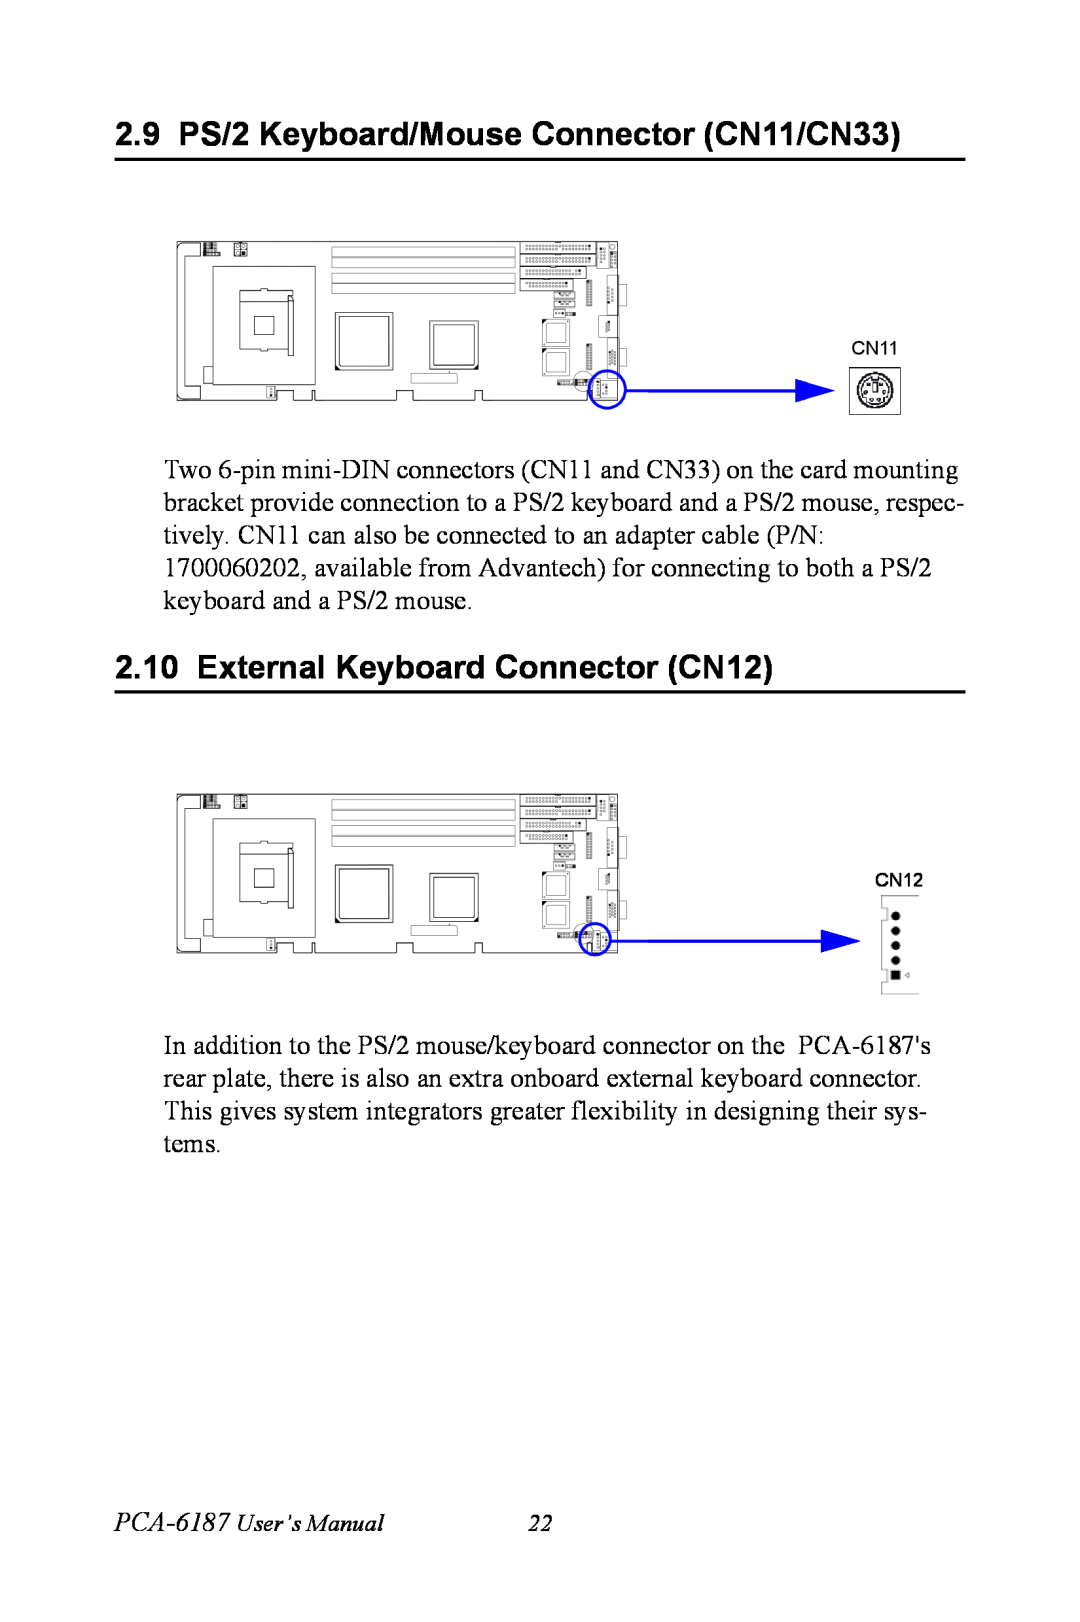 Advantech PCA-6187 user manual 2.9 PS/2 Keyboard/Mouse Connector CN11/CN33, External Keyboard Connector CN12 